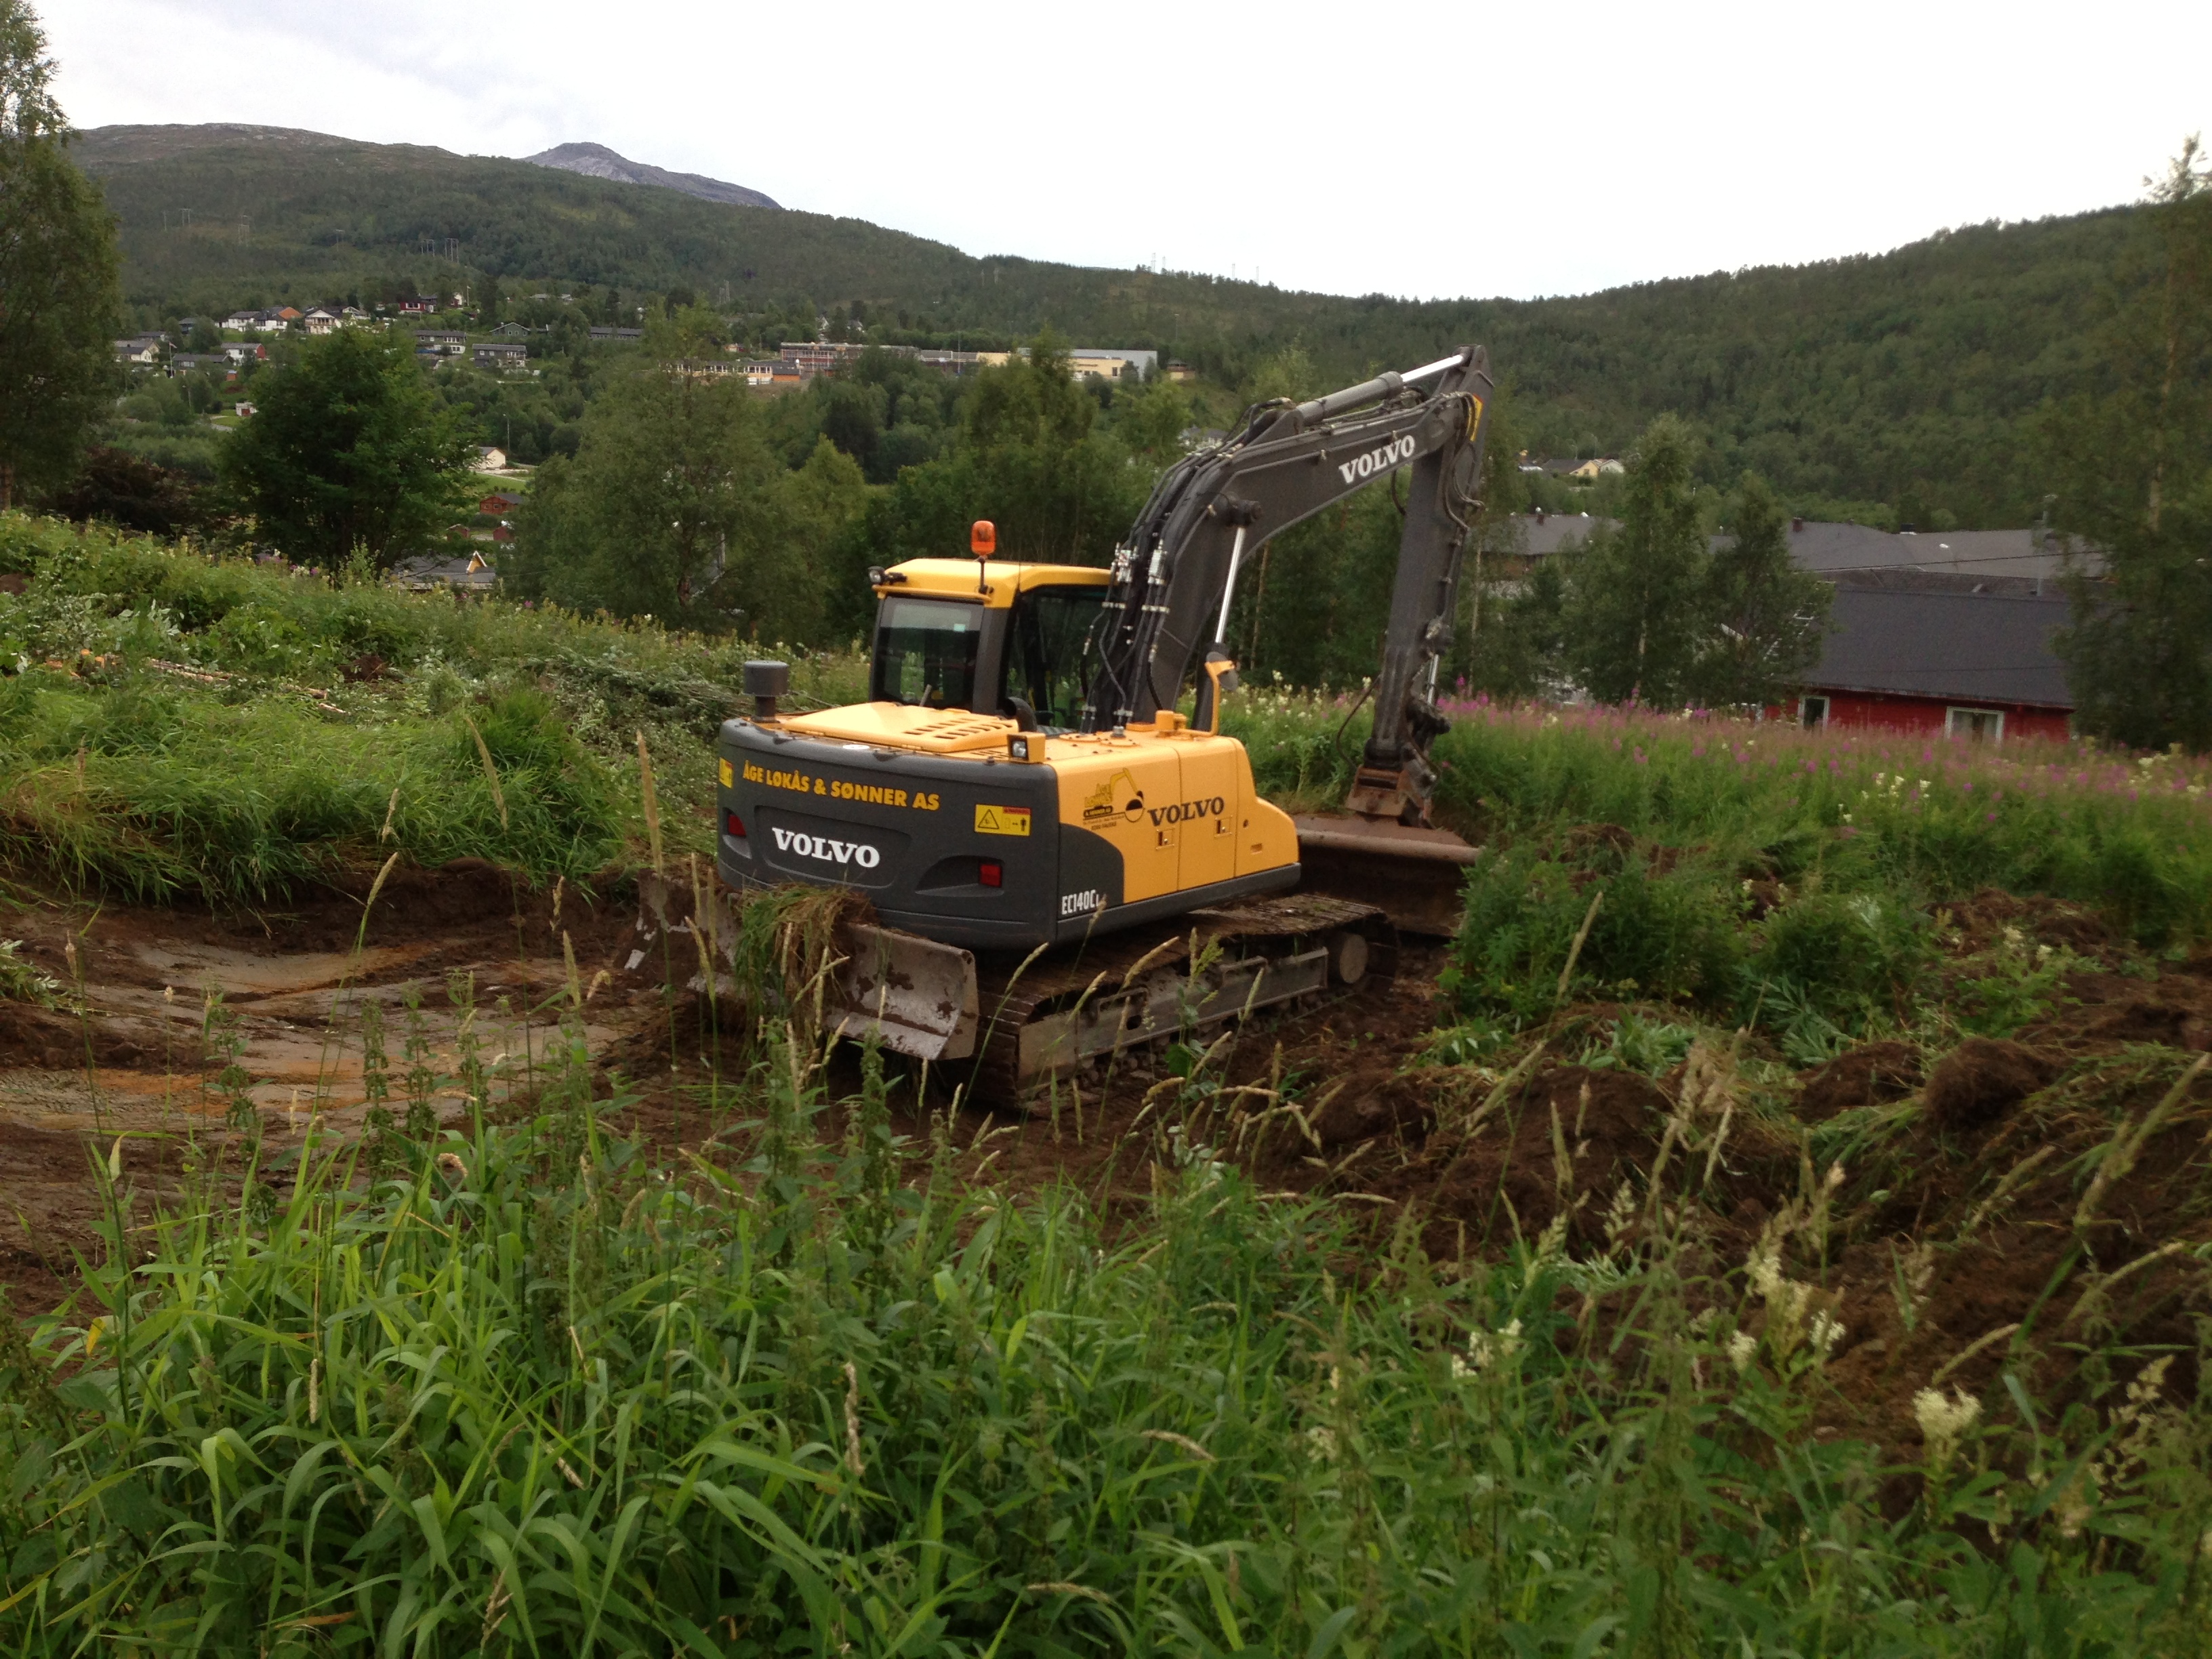 Bygging av nytt Nordlandshus i Nordland - 2013-07-30 20.35.06.jpg - Johnnyma